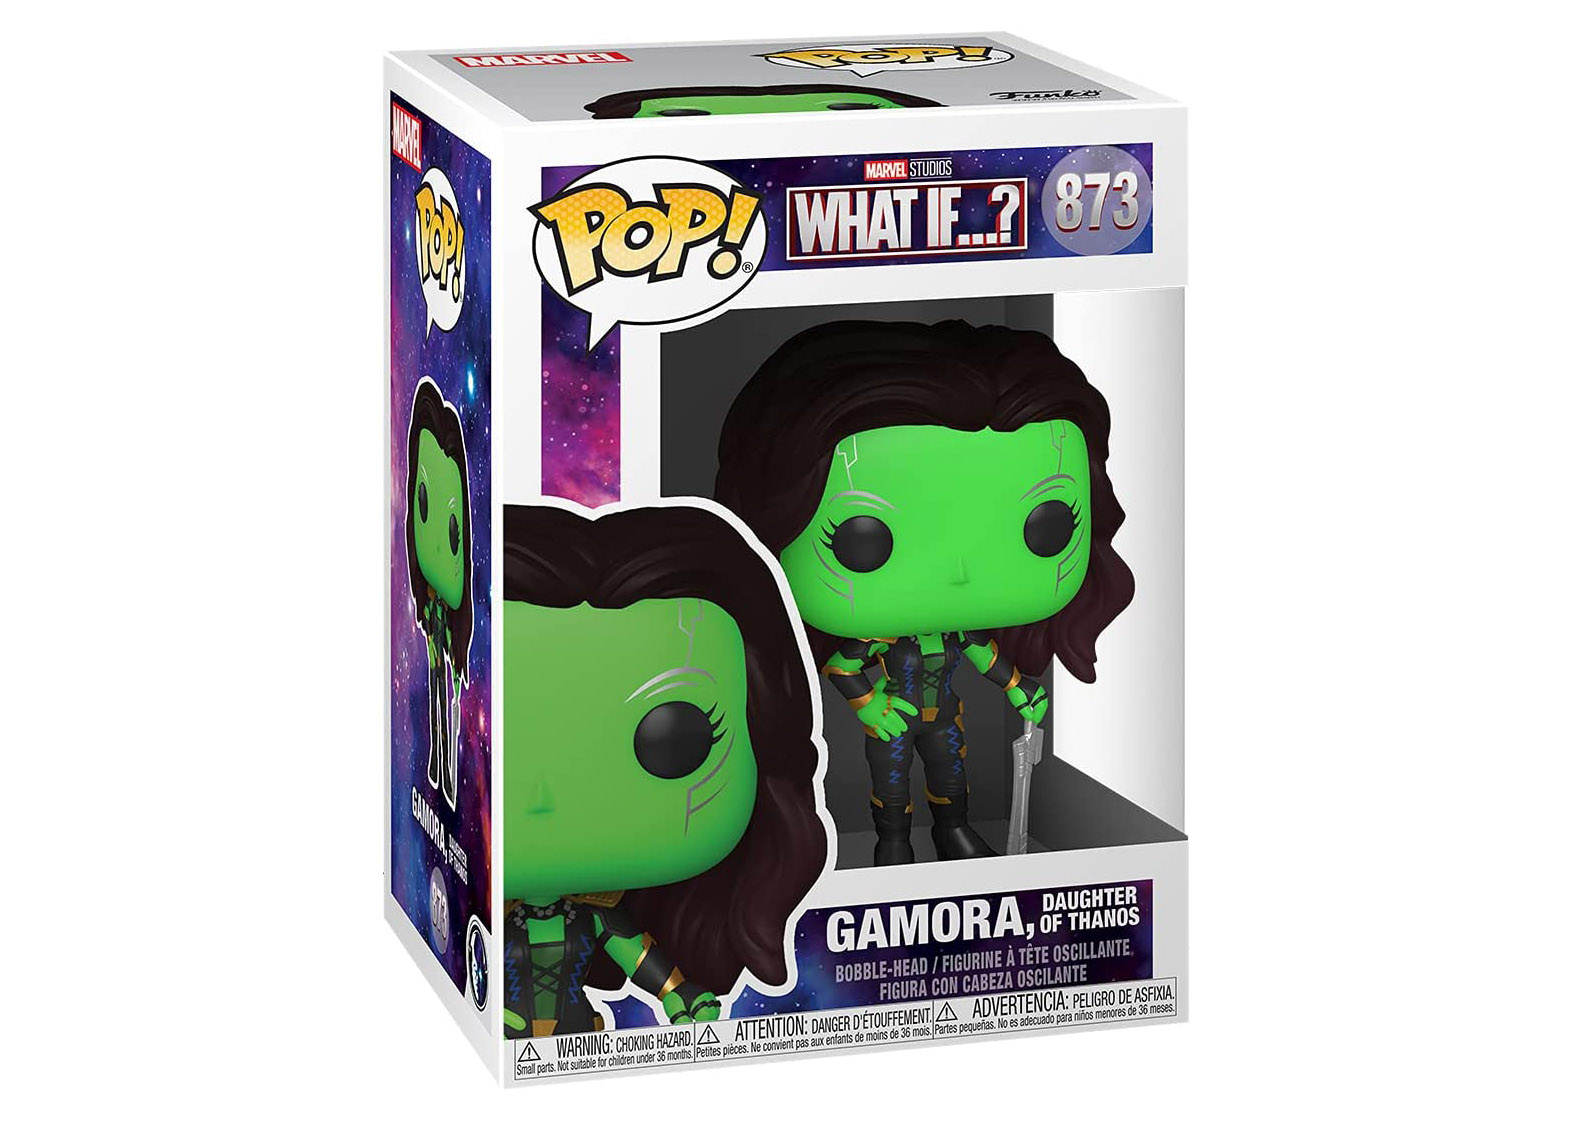 Funko Pop! Marvel Studios What If? Gamora, Daughter of Thanos 